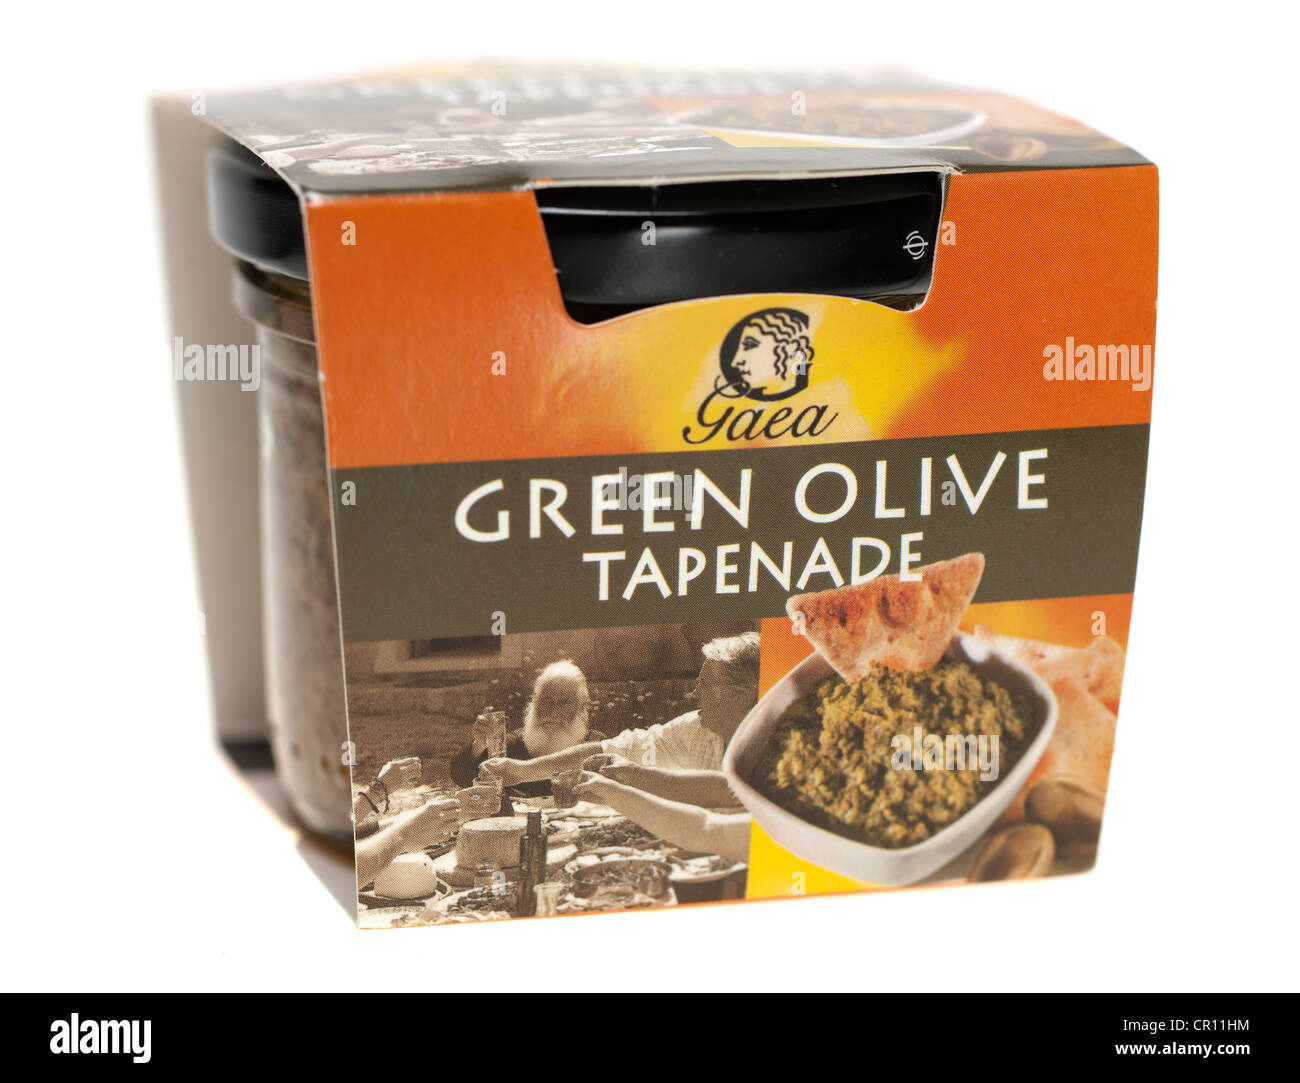 Jar of Gaea Green Olive Tapenade Stock Photo